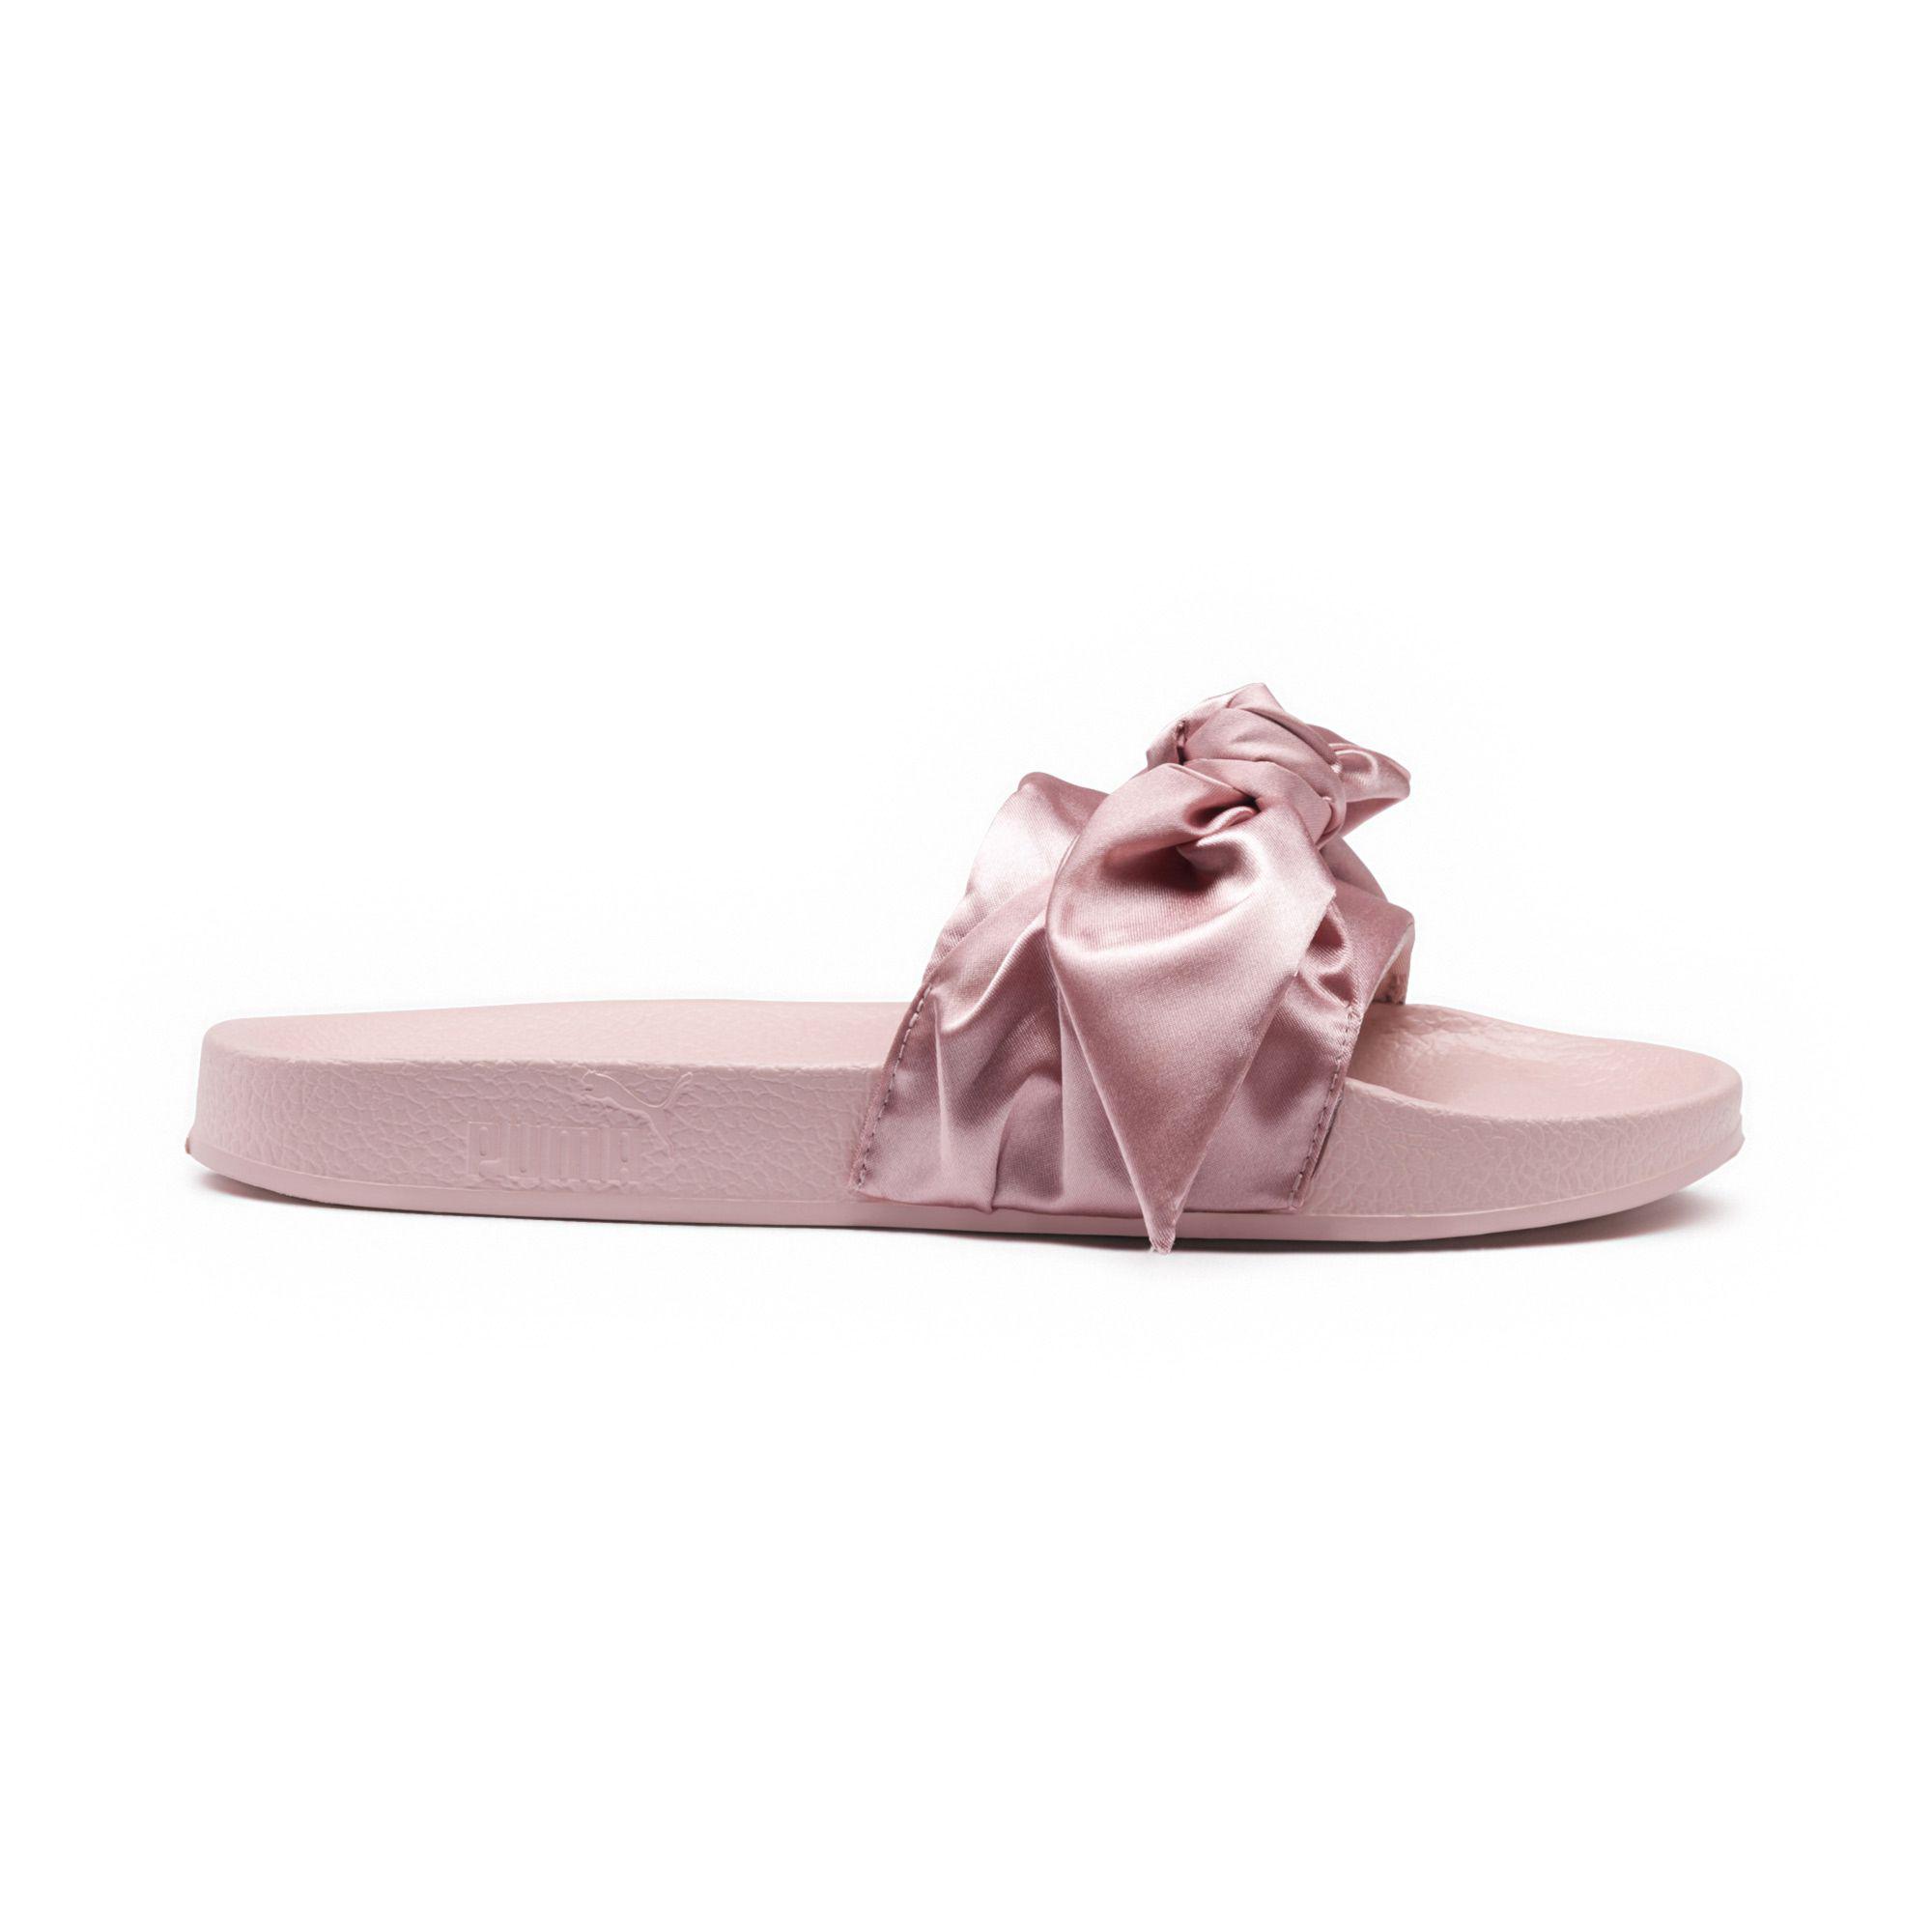 PUMA Satin X Fenty Bow Slides in Silver Pink (Pink) - Lyst